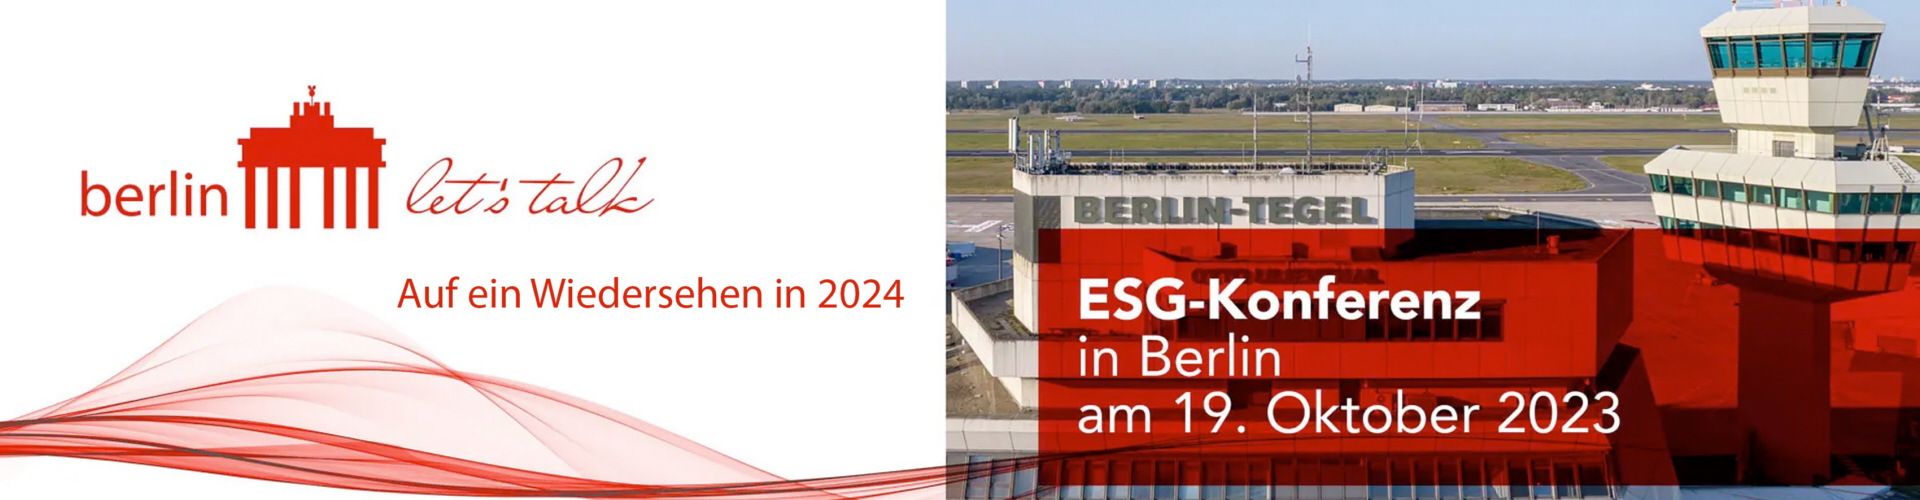 berlin let's talk 2024